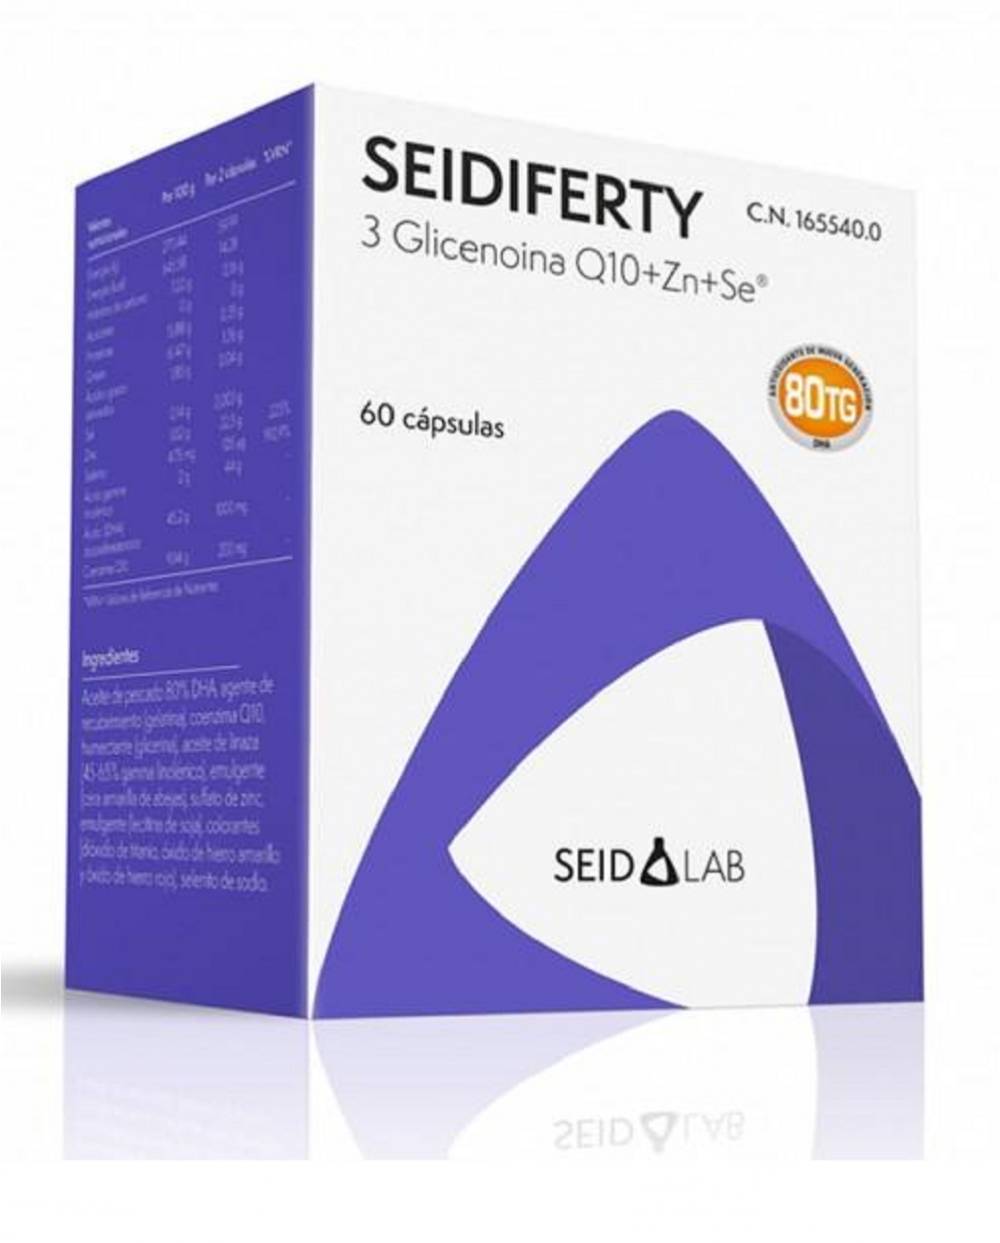 Seidiferty - 60 cápsulas - Seid